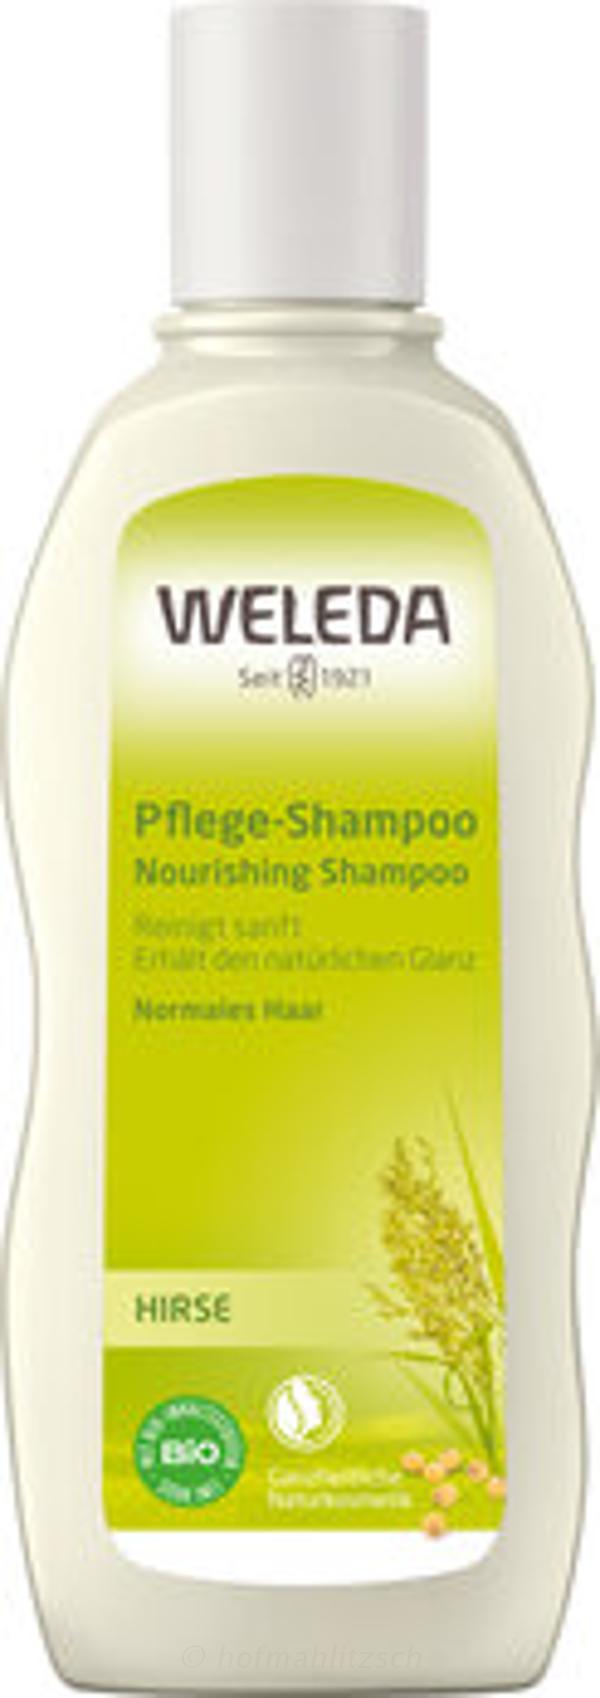 Produktfoto zu Hirse Pflege-Shampoo